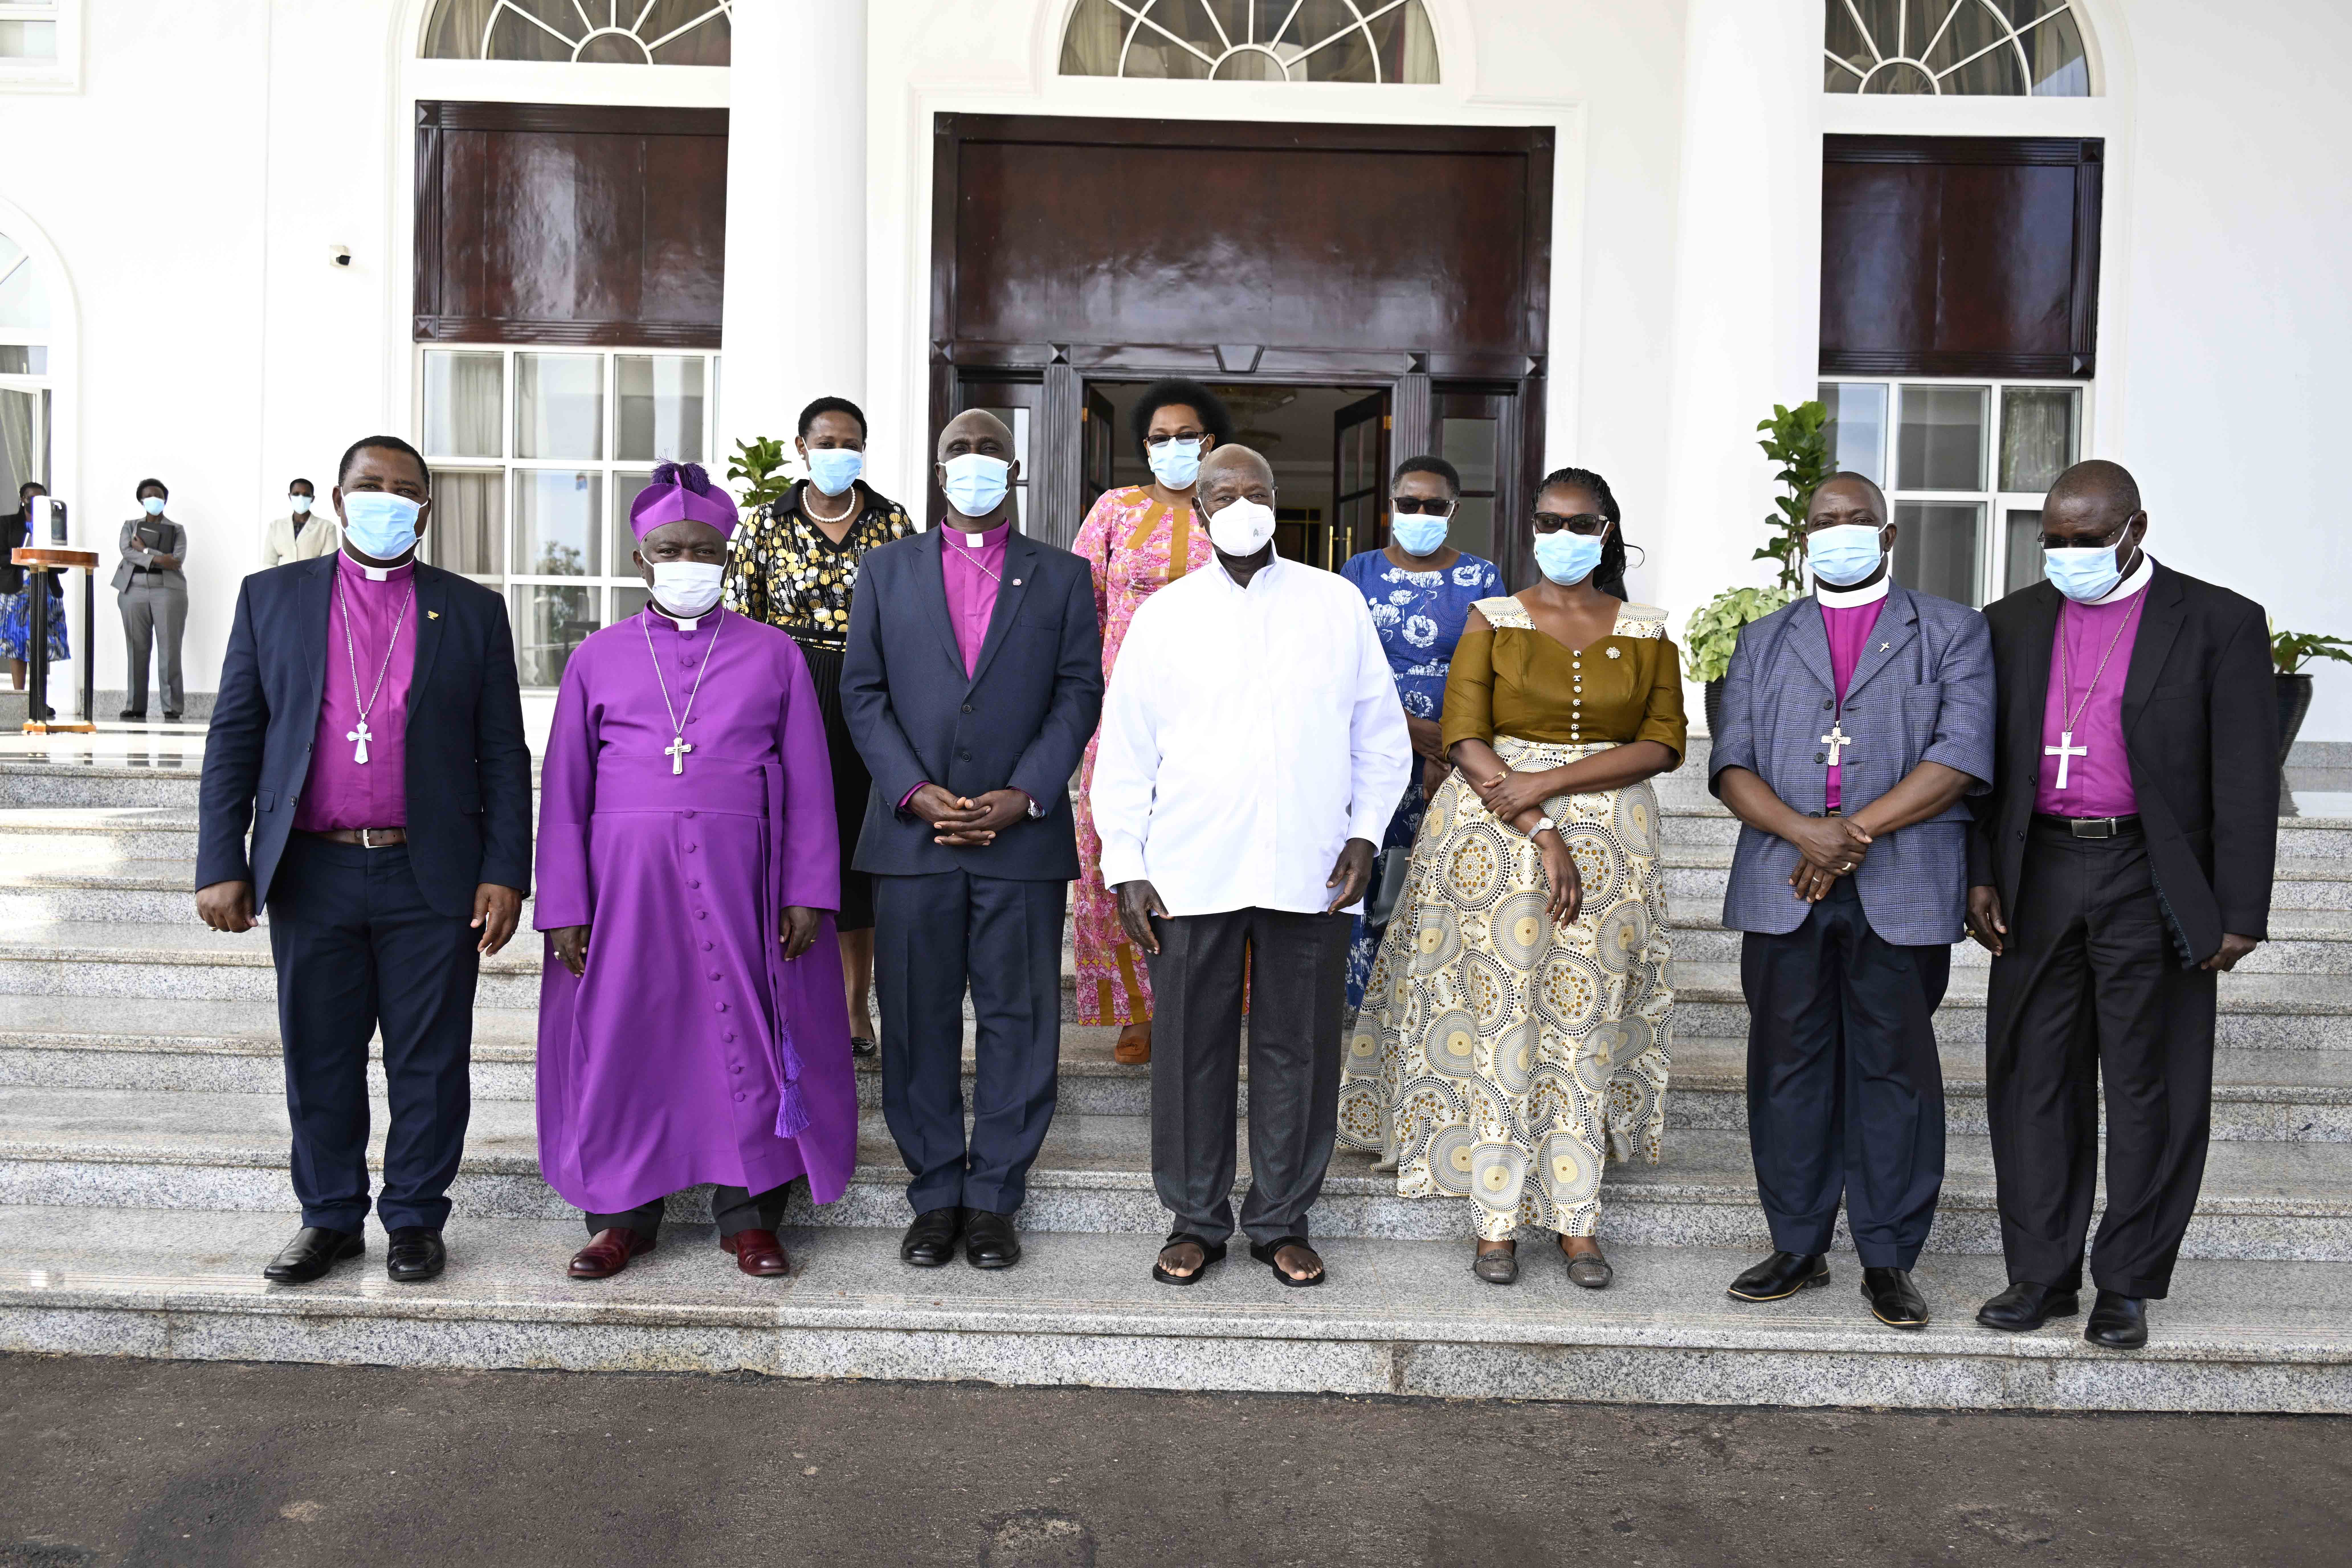 Museveni , religious leaders to convene in Kampala for anti-corruption, economic empowerment talks